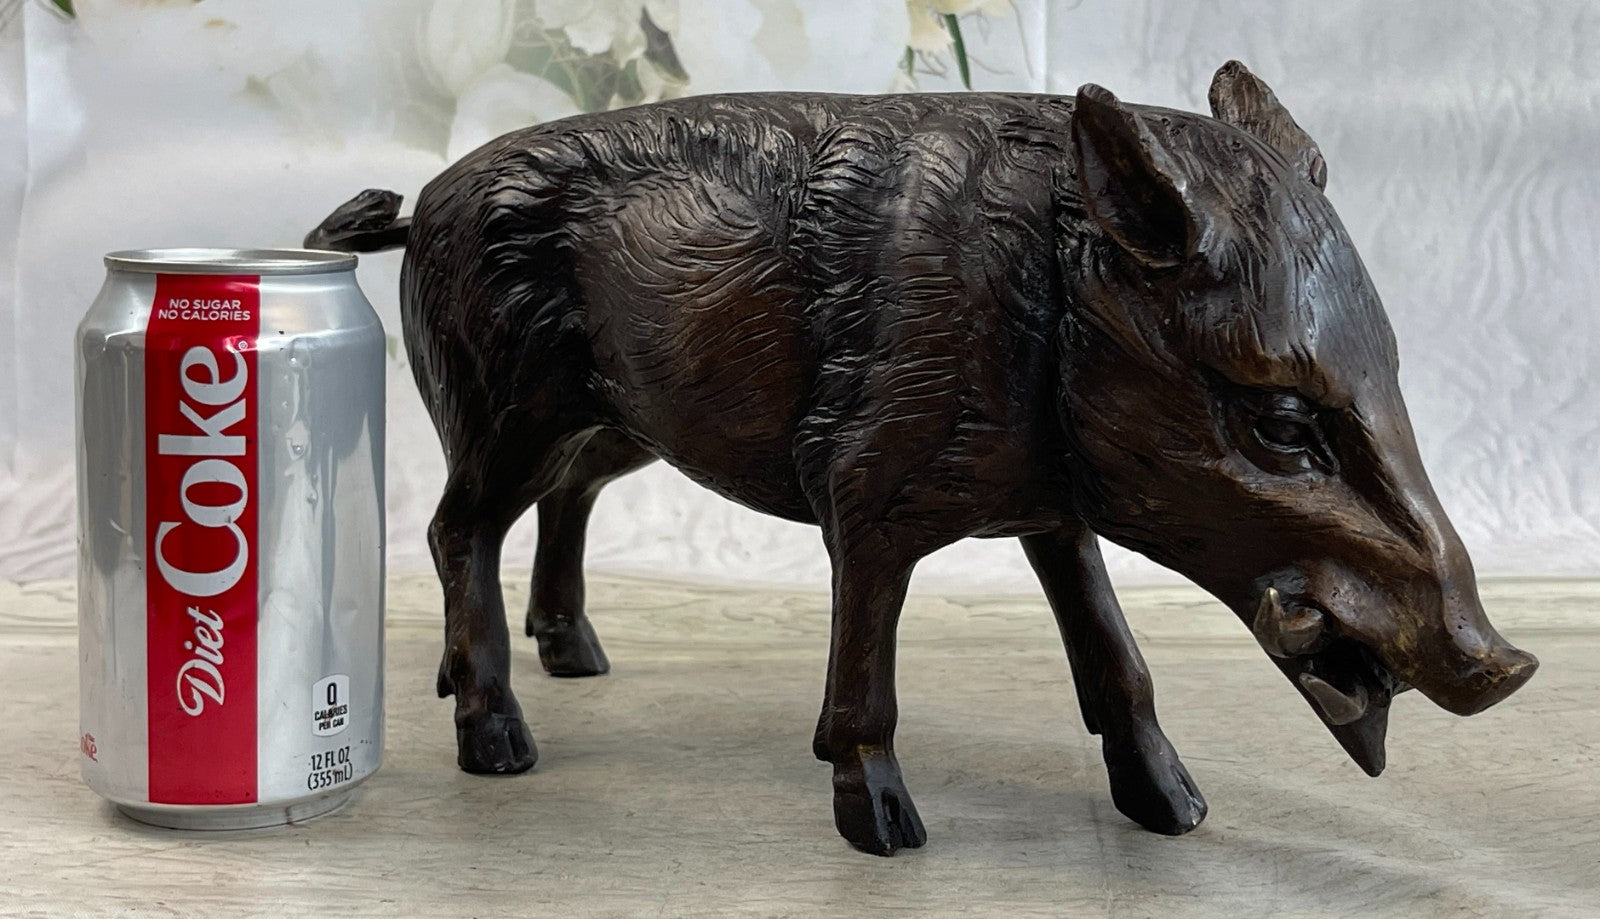 Hot Cast Bronze Hand Made Sculpture of Wild Boar Hog Pig Statue Figurine Farm